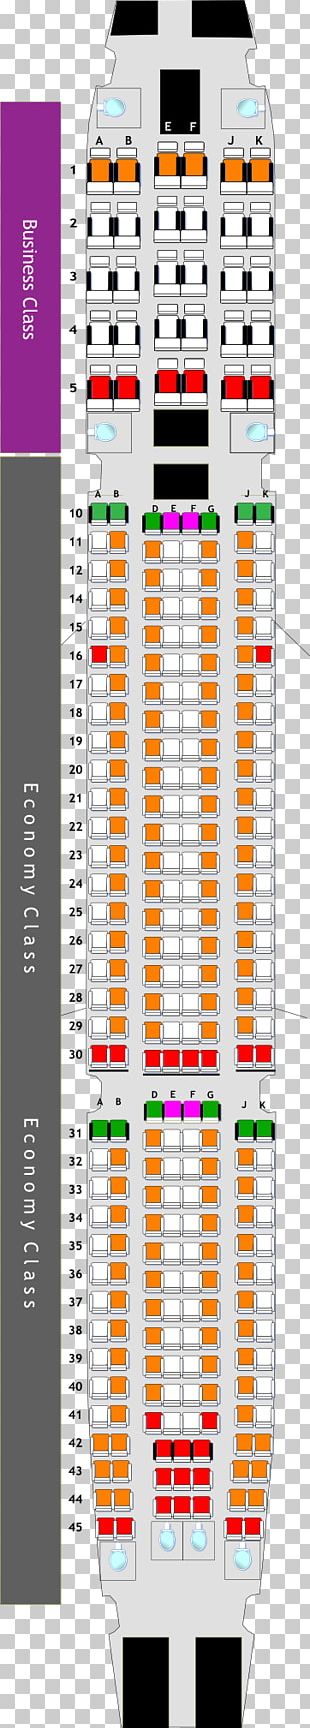 Eurostar Seating Chart